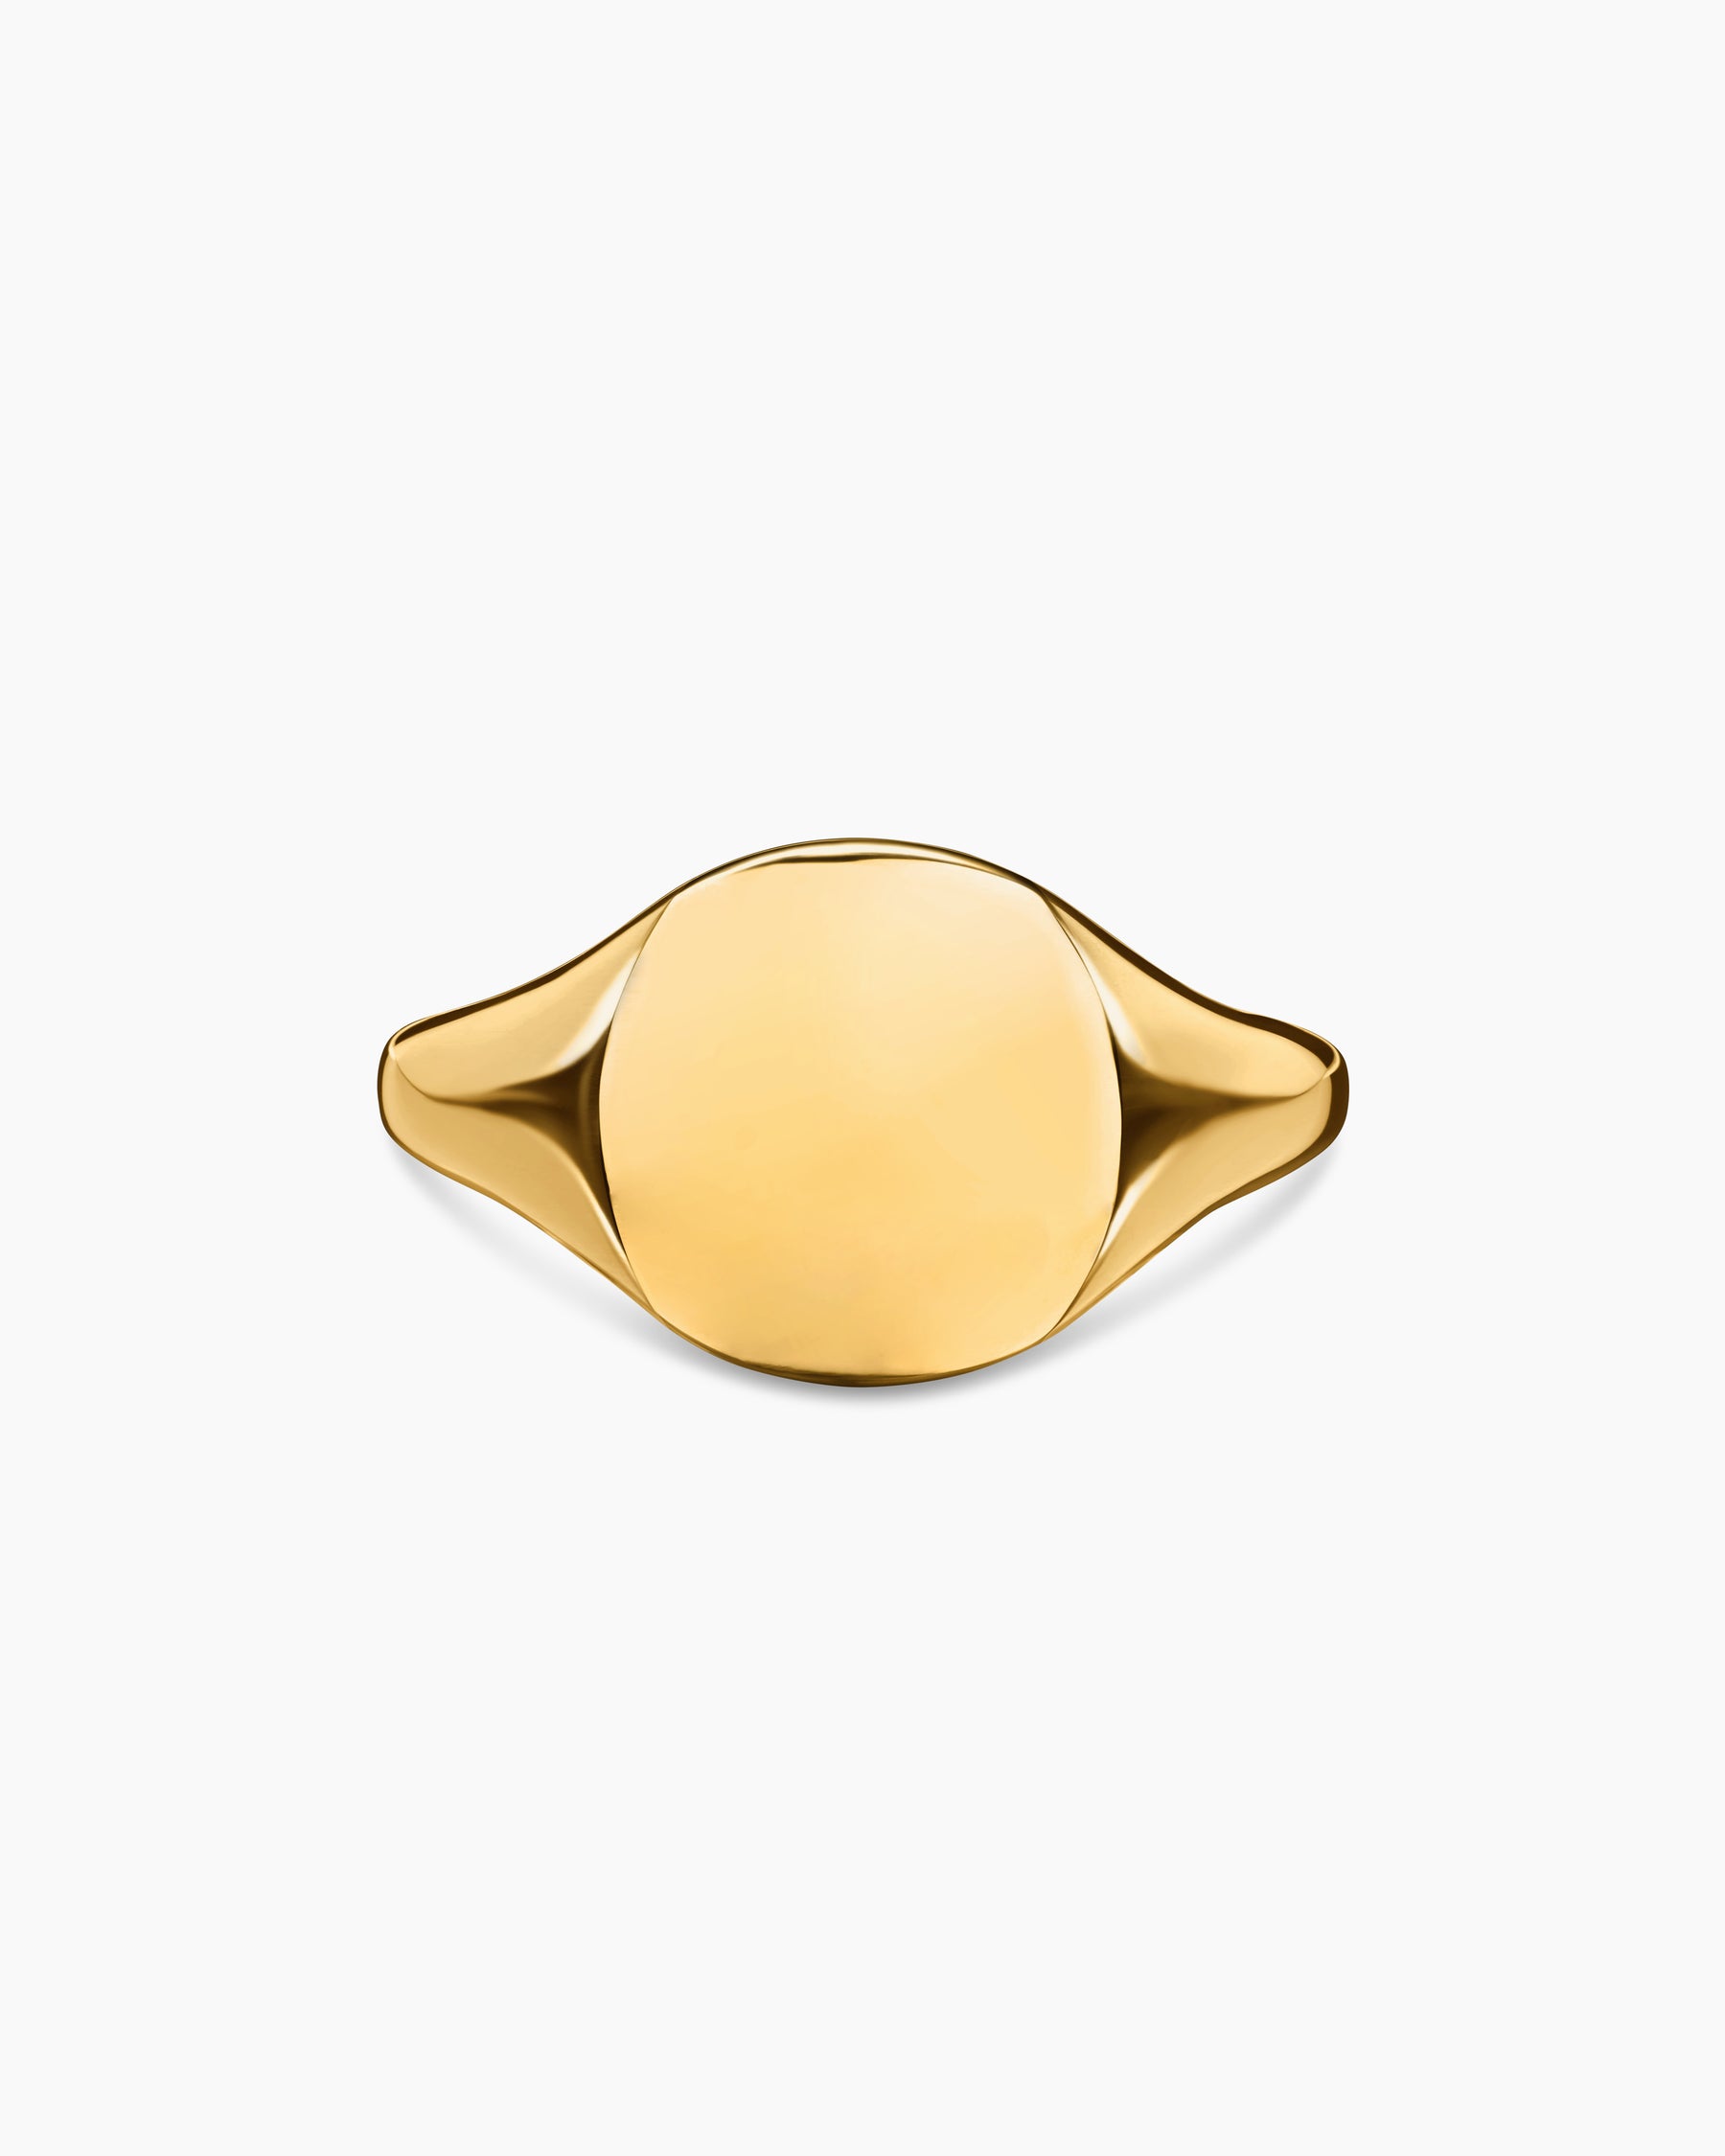 David Yurman Mini DY Initial J Pinky Ring in 18K Yellow Gold with Diamonds, Size 5.5, Women's, Rings Monogram Initial & Alphabet Rings